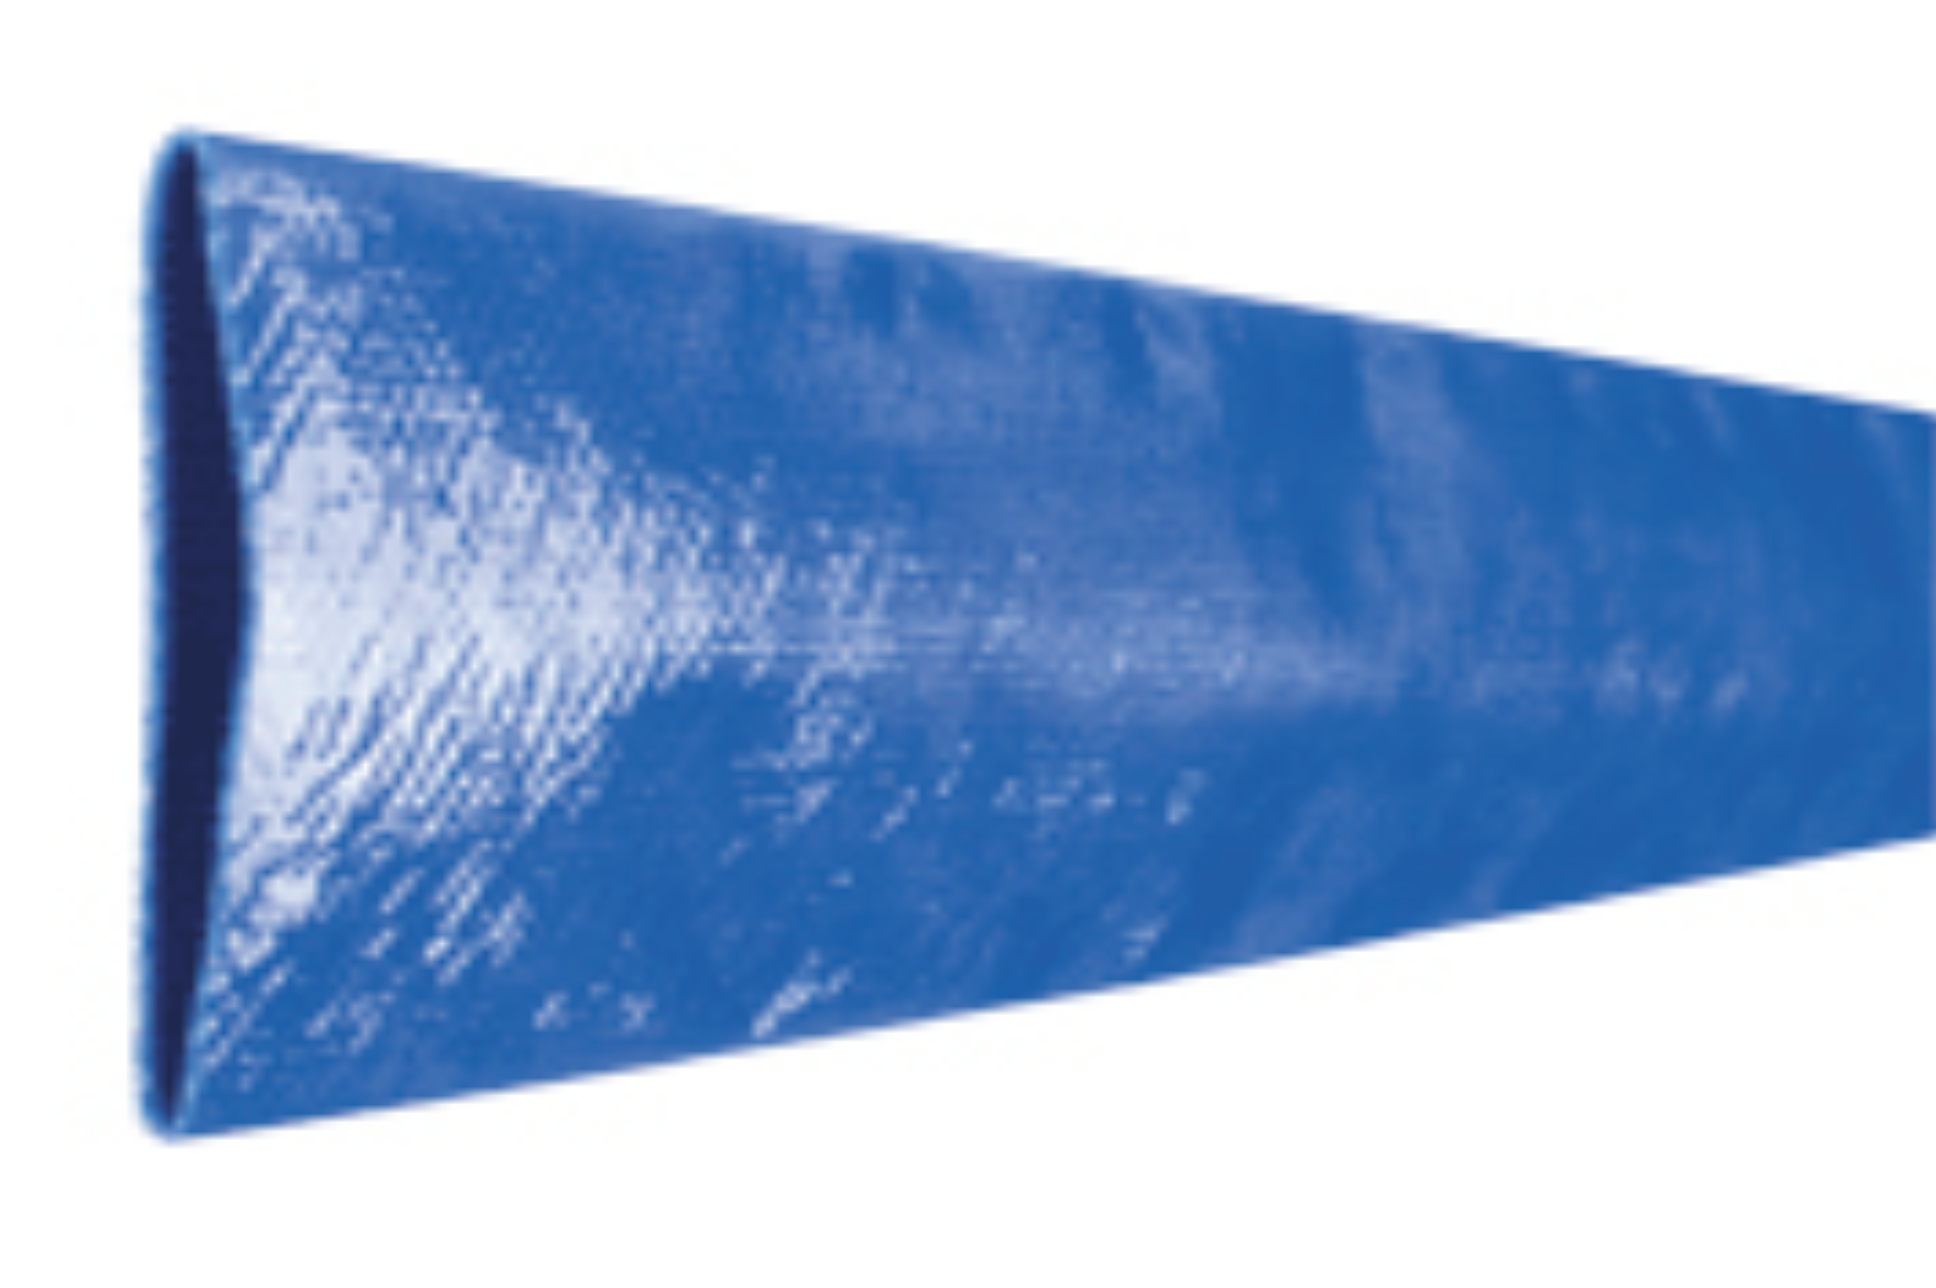 BLUE PVC LAY FLAT DISCHARGE HOSE 4" ID X 75' 